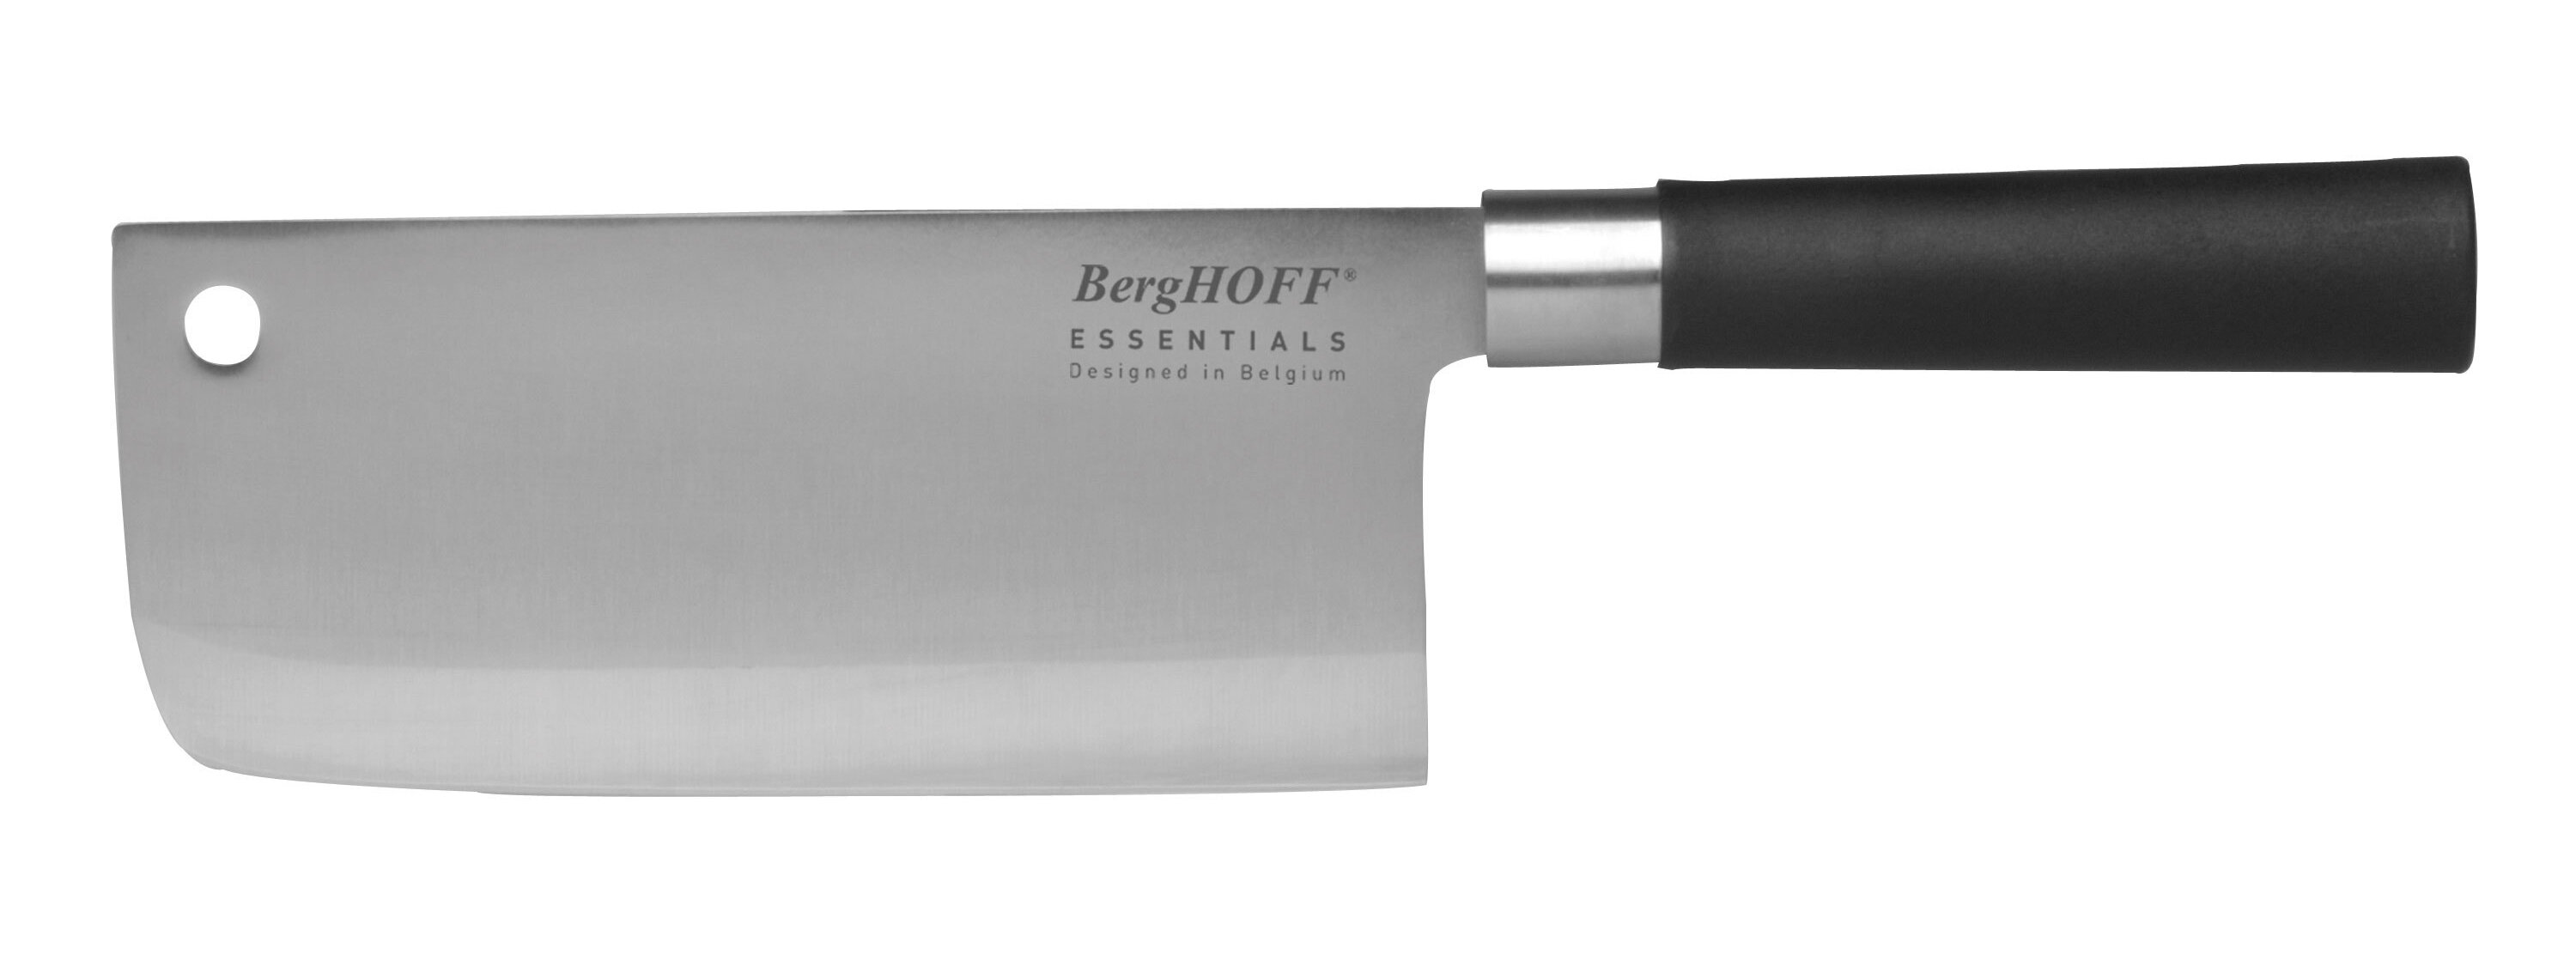 Berghoff Professional Mandoline Slicer, Silver